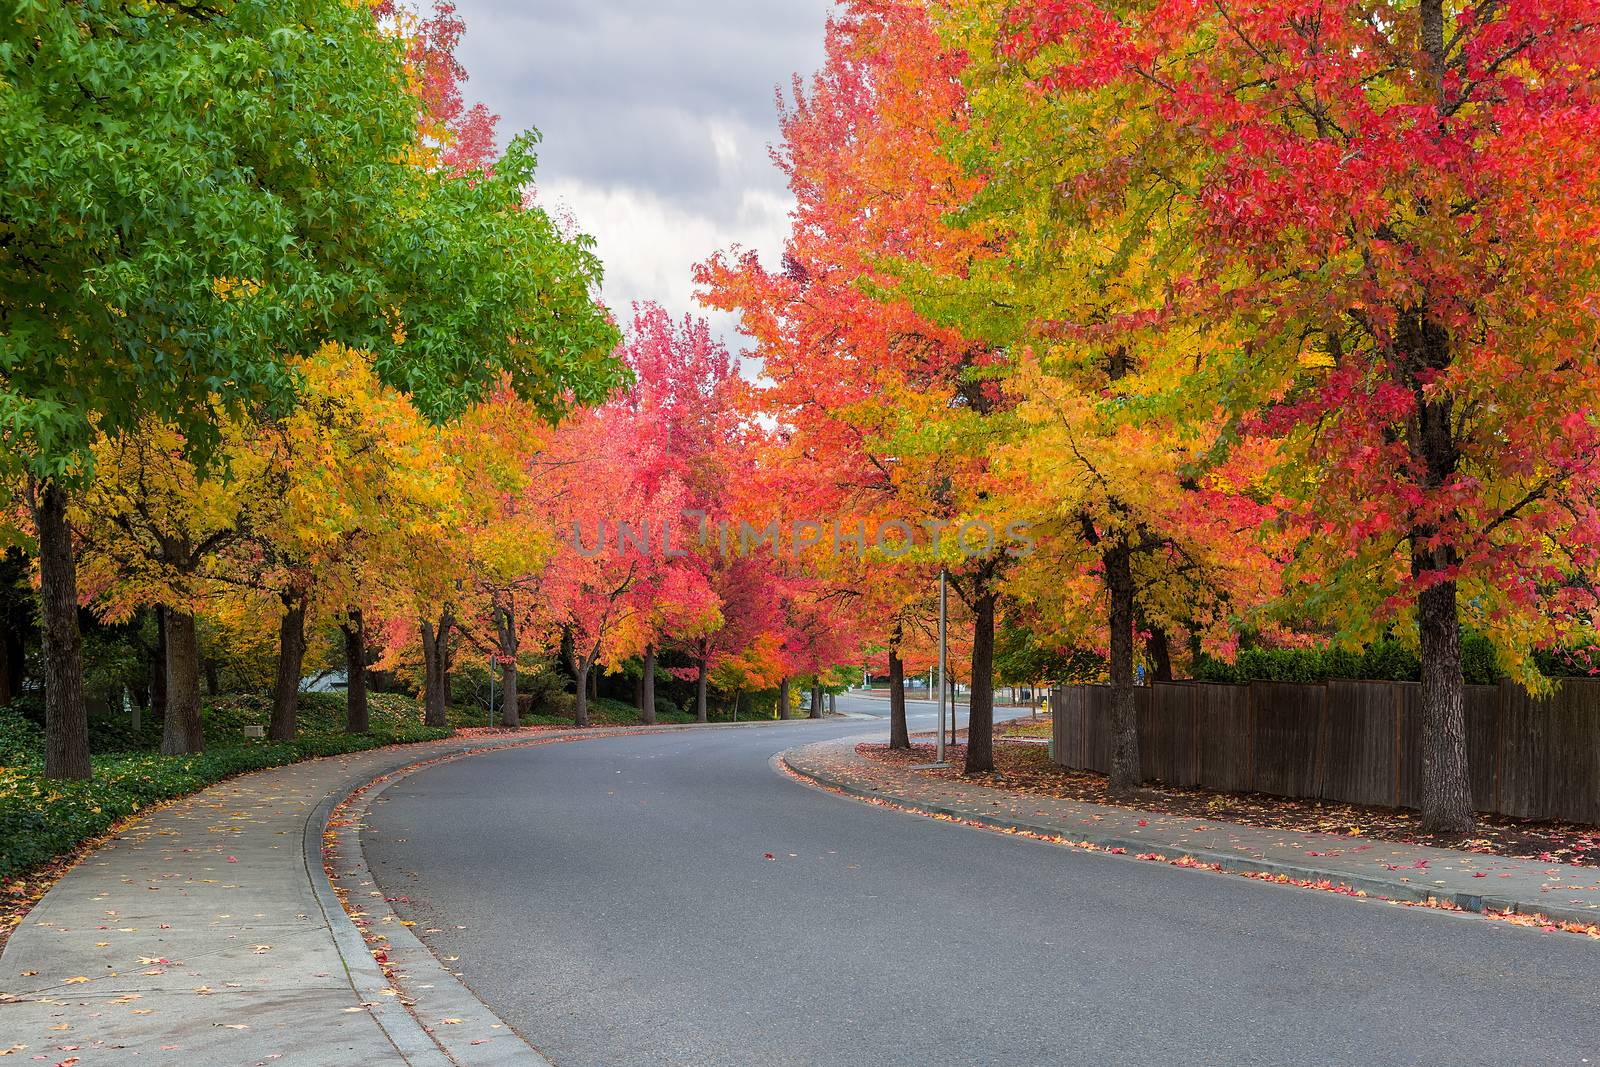 American Sweetgum Tree Lined Street in Fall by jpldesigns